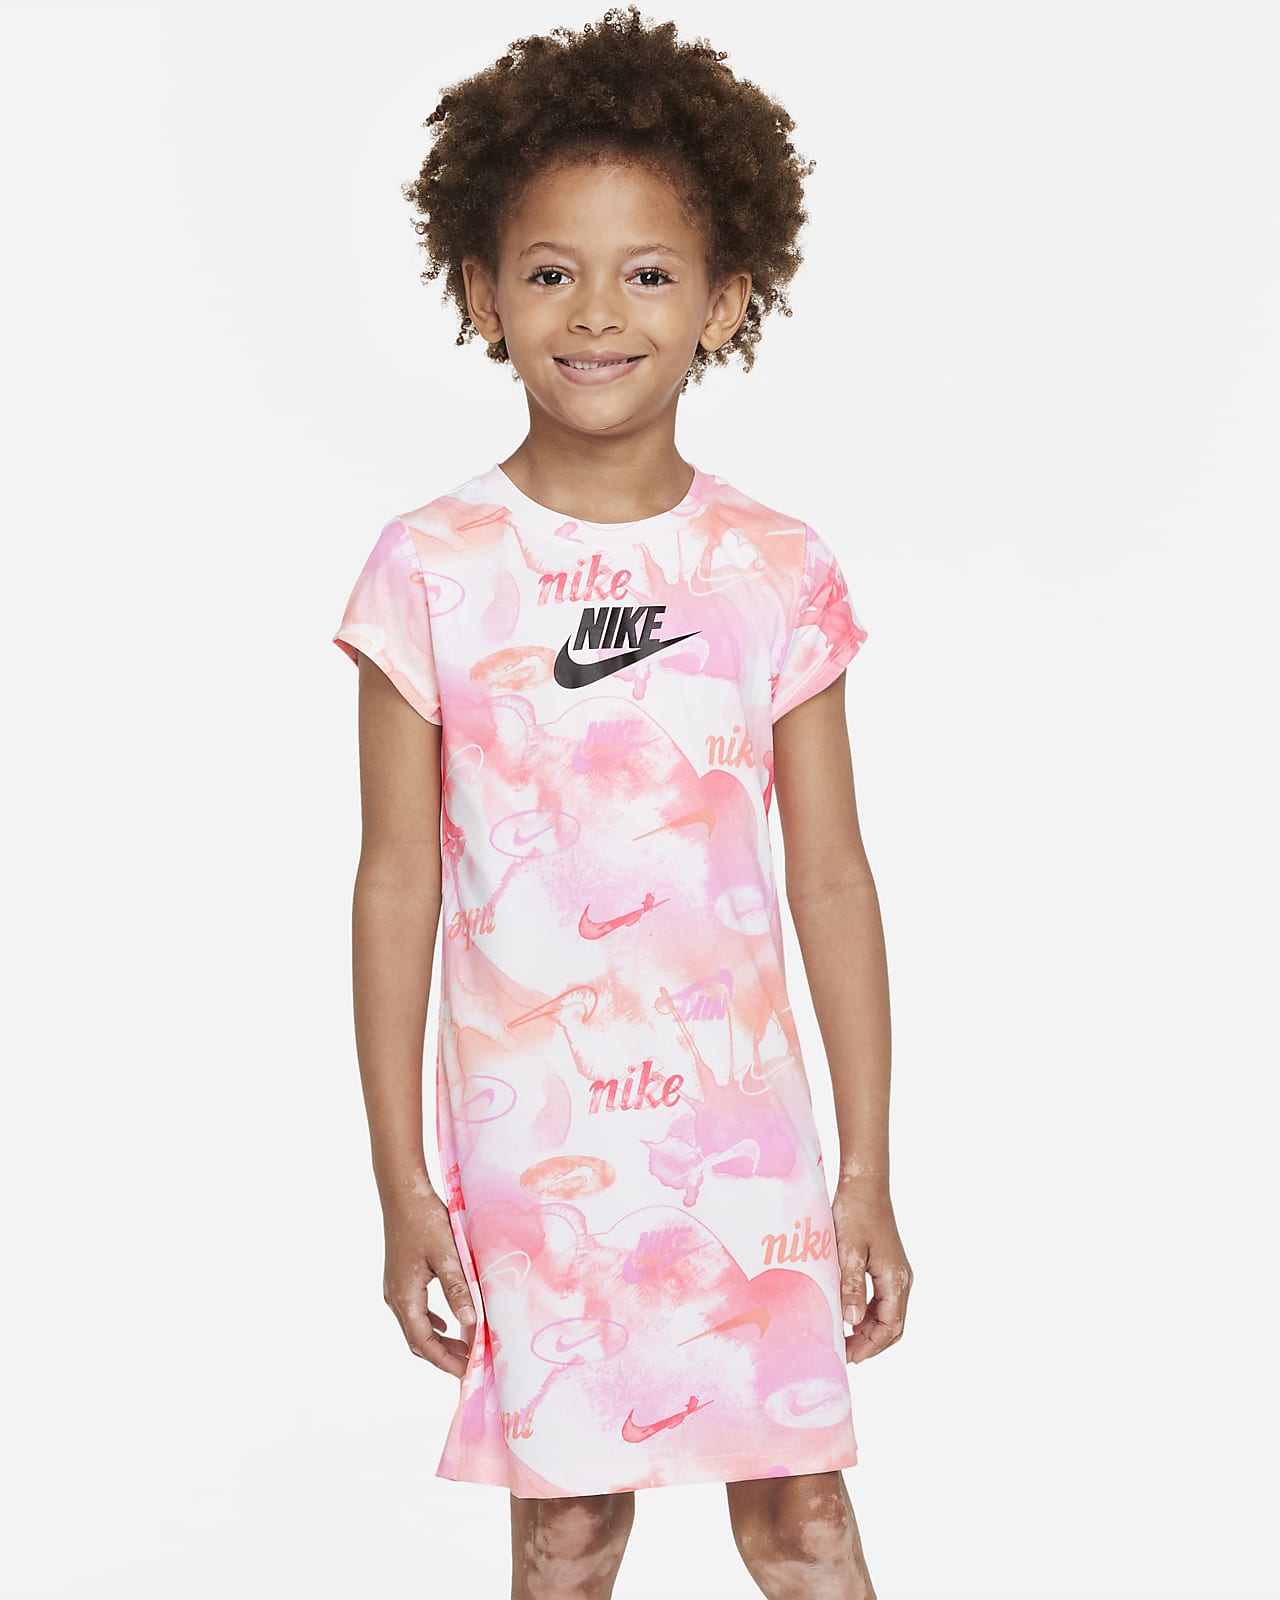 Leegte ledematen ontgrendelen Nike Little Kids' Summer Daze T-Shirt Dress. Nike.com